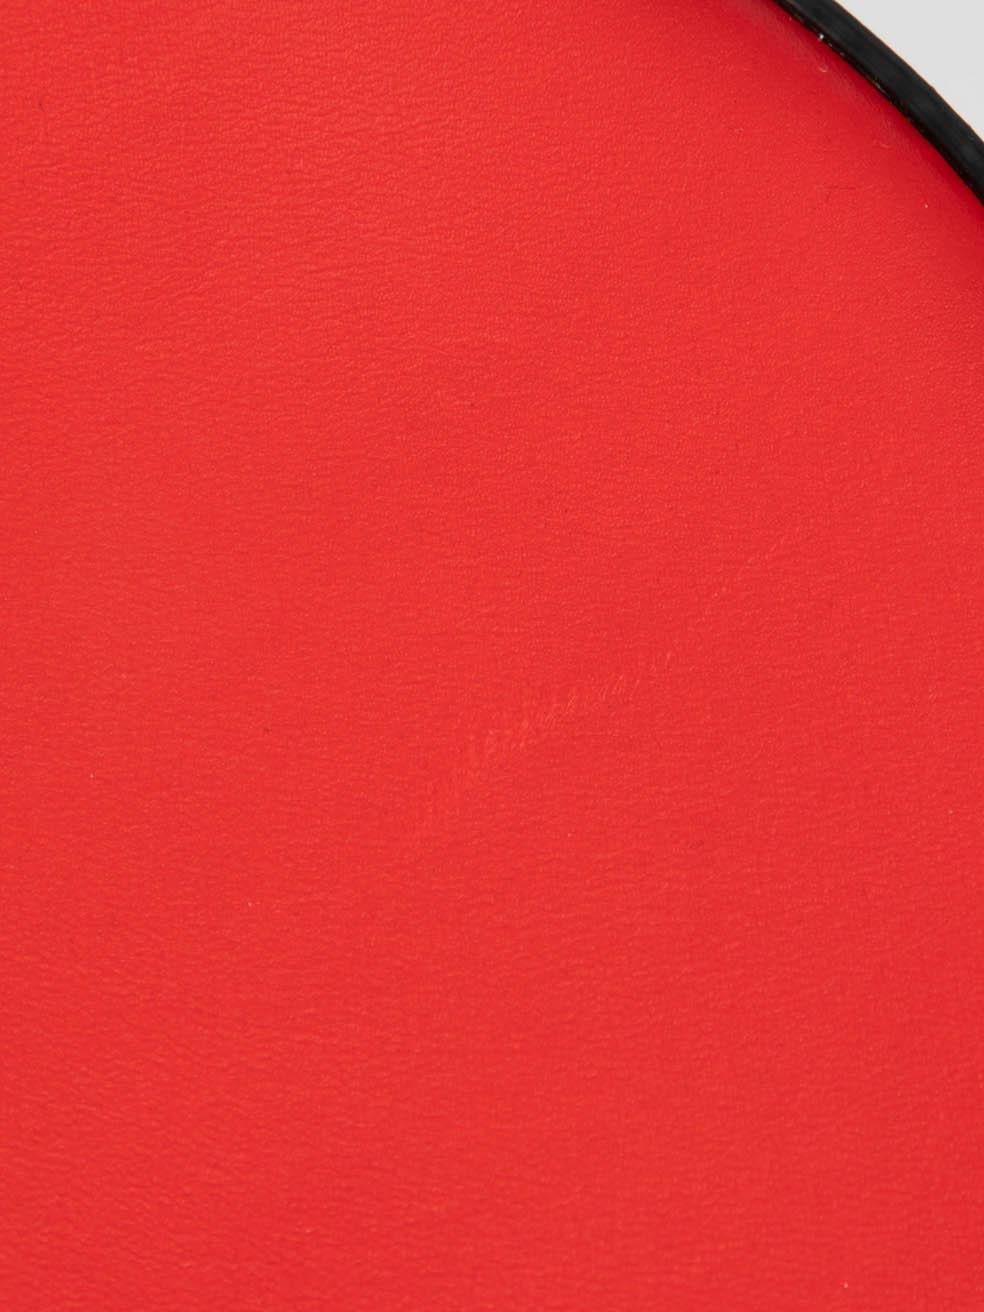 Alexander Wang Women's Red Calfskin Mini Lia Shoulder Bag 3